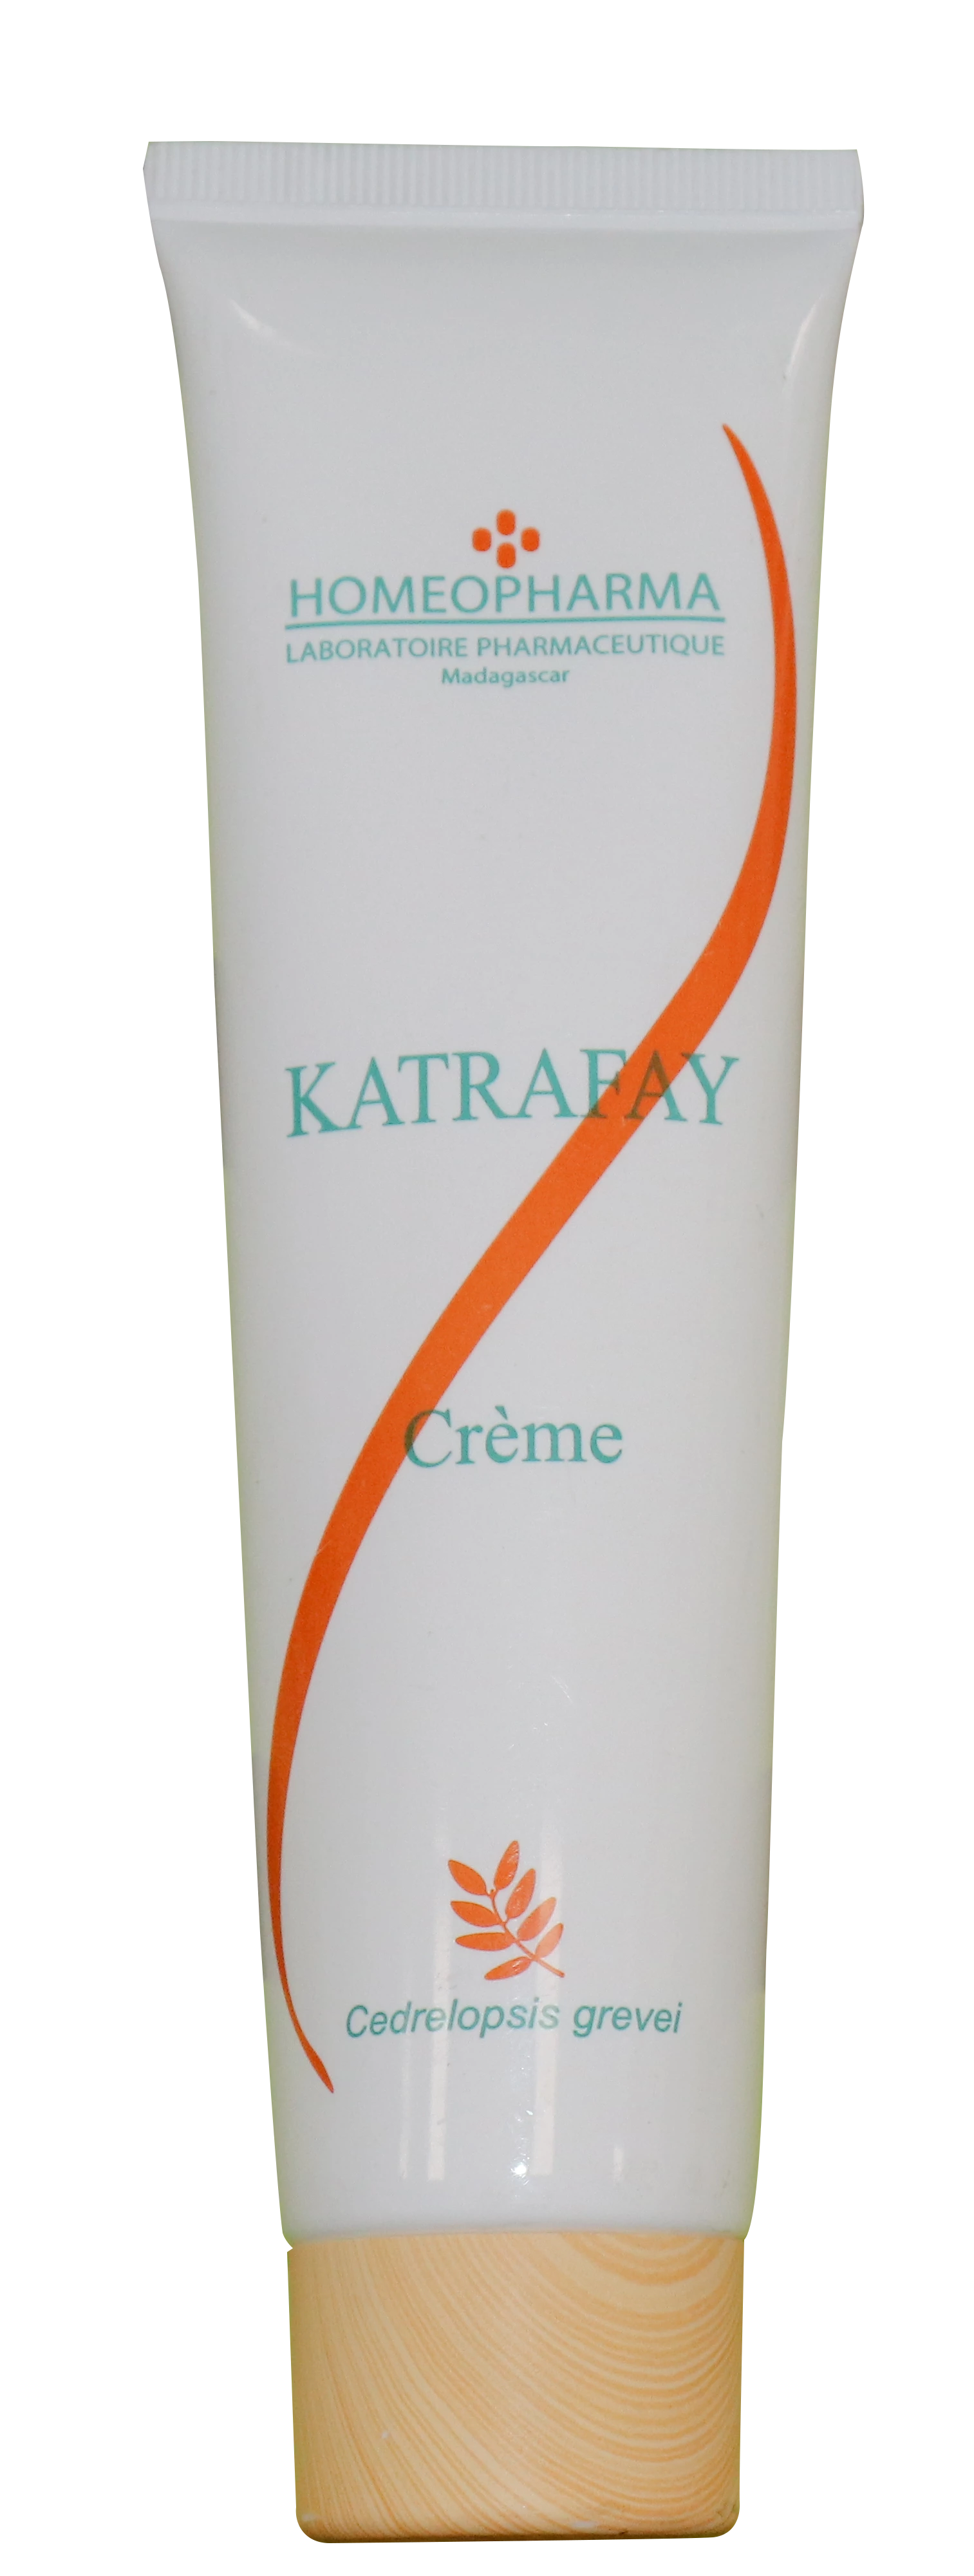 Creme Katrafay 125ml - Homeopharma